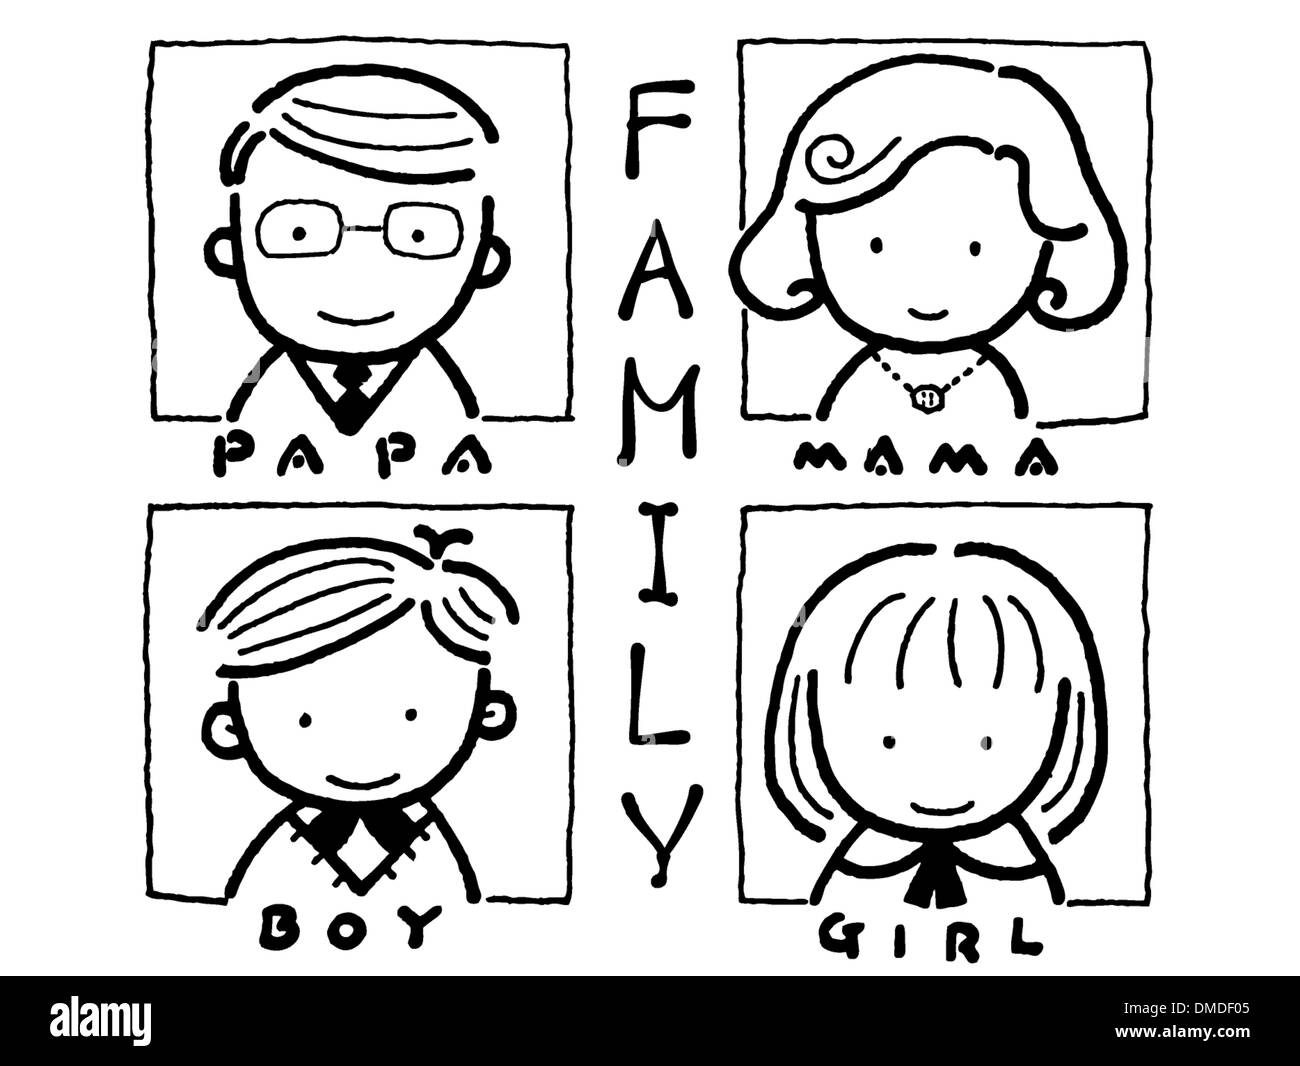 Family cartoon Black and White Stock Photos & Images - Alamy